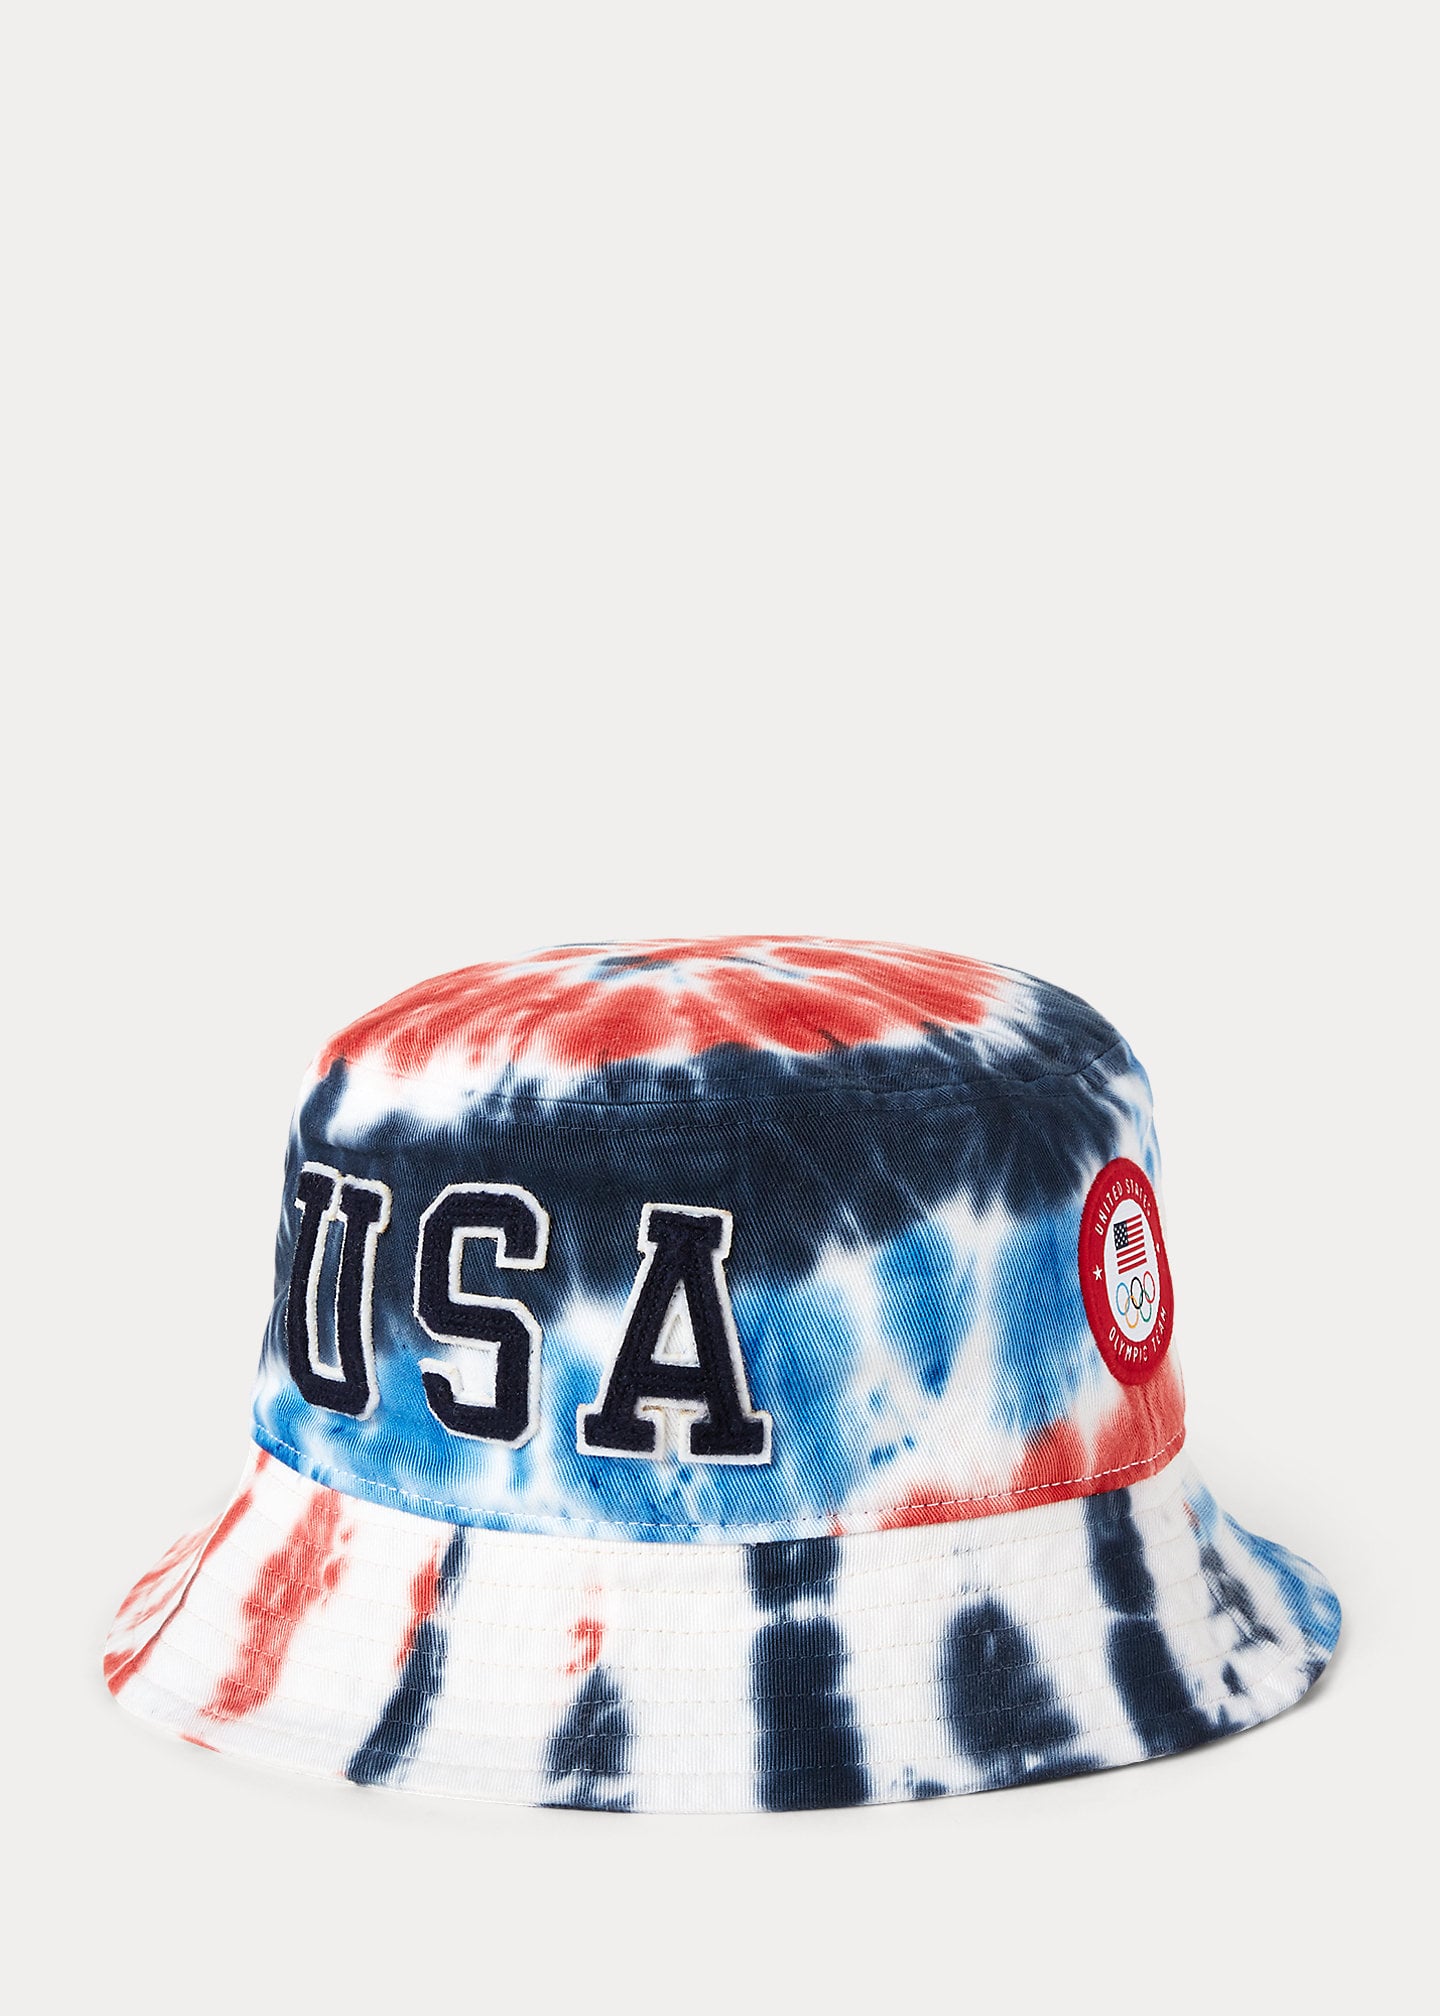 Shop the Tie-Dye Team USA Olympic Bucket Hat by Ralph Lauren | POPSUGAR  Fashion